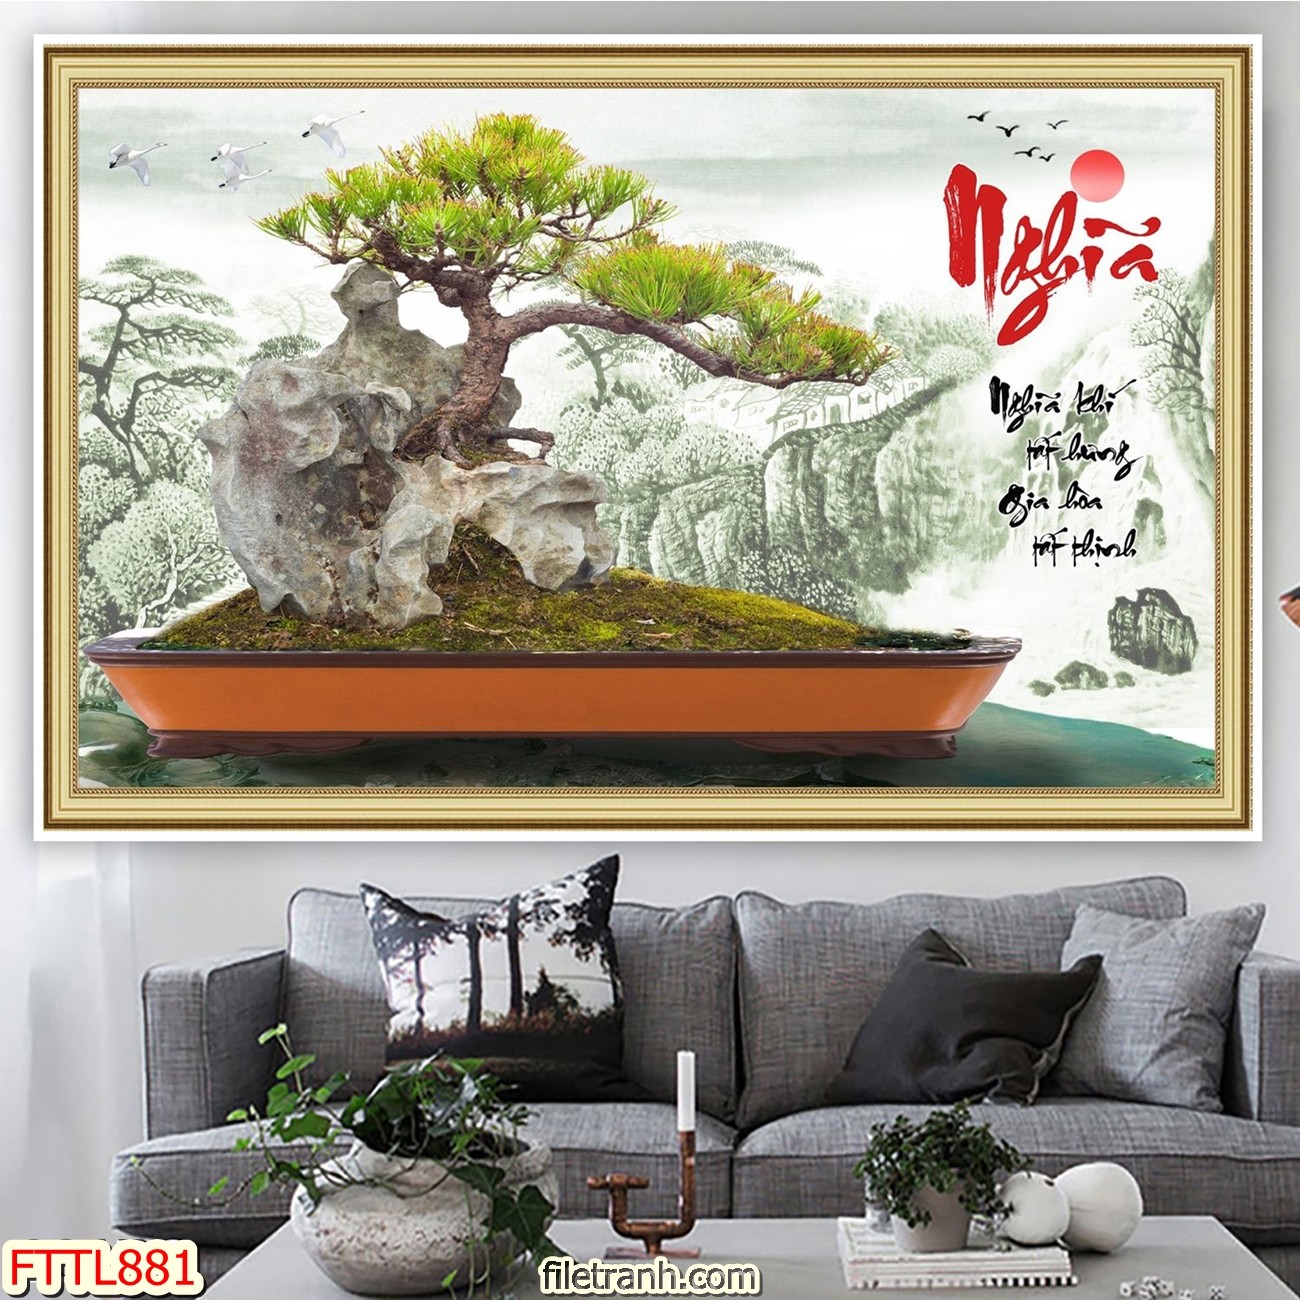 http://filetranh.com/file-tranh-chau-mai-bonsai/file-tranh-chau-mai-bonsai-fttl881.html